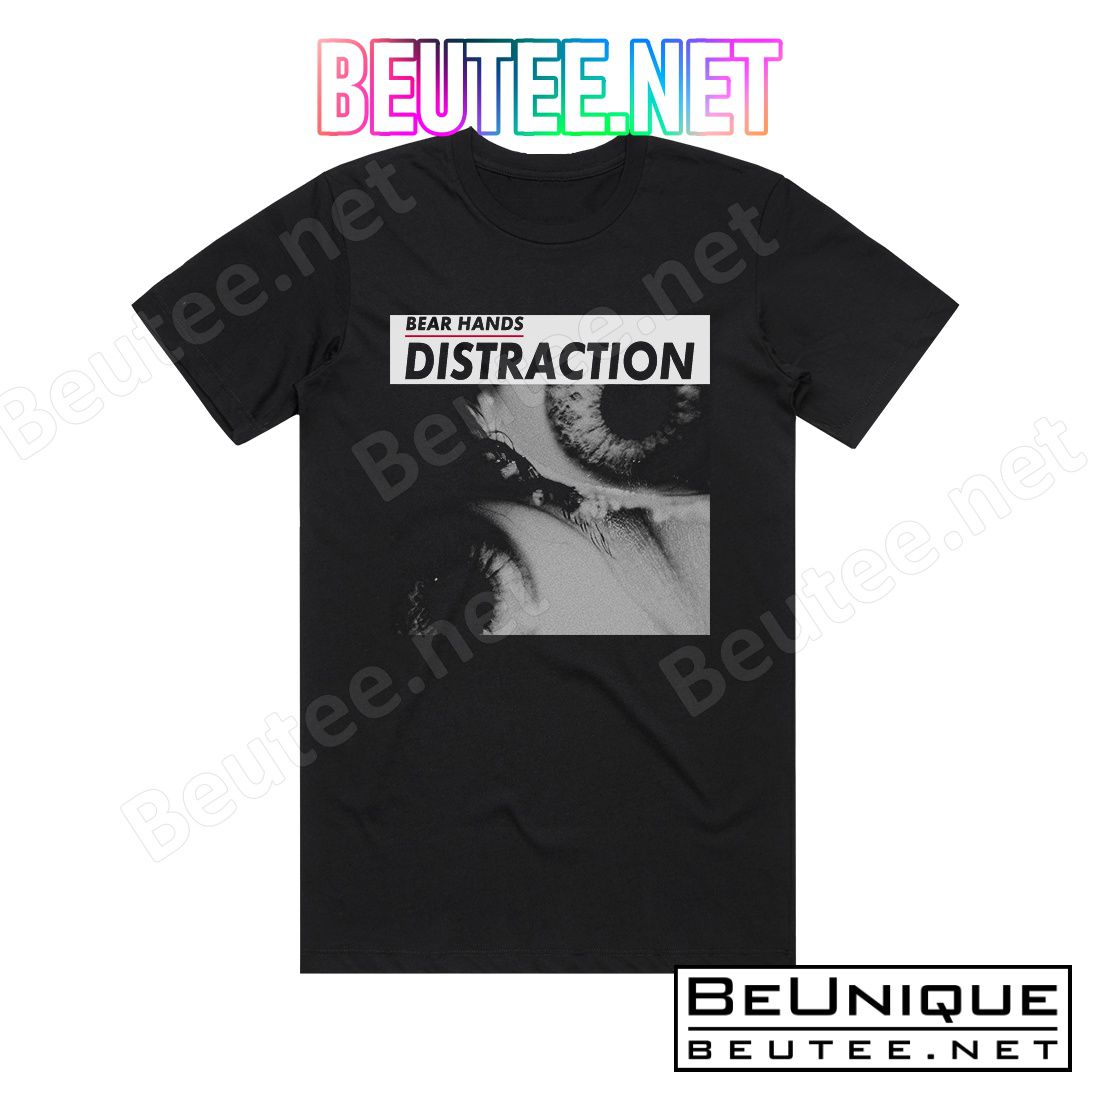 Bear Hands Distraction Album Cover T-Shirt